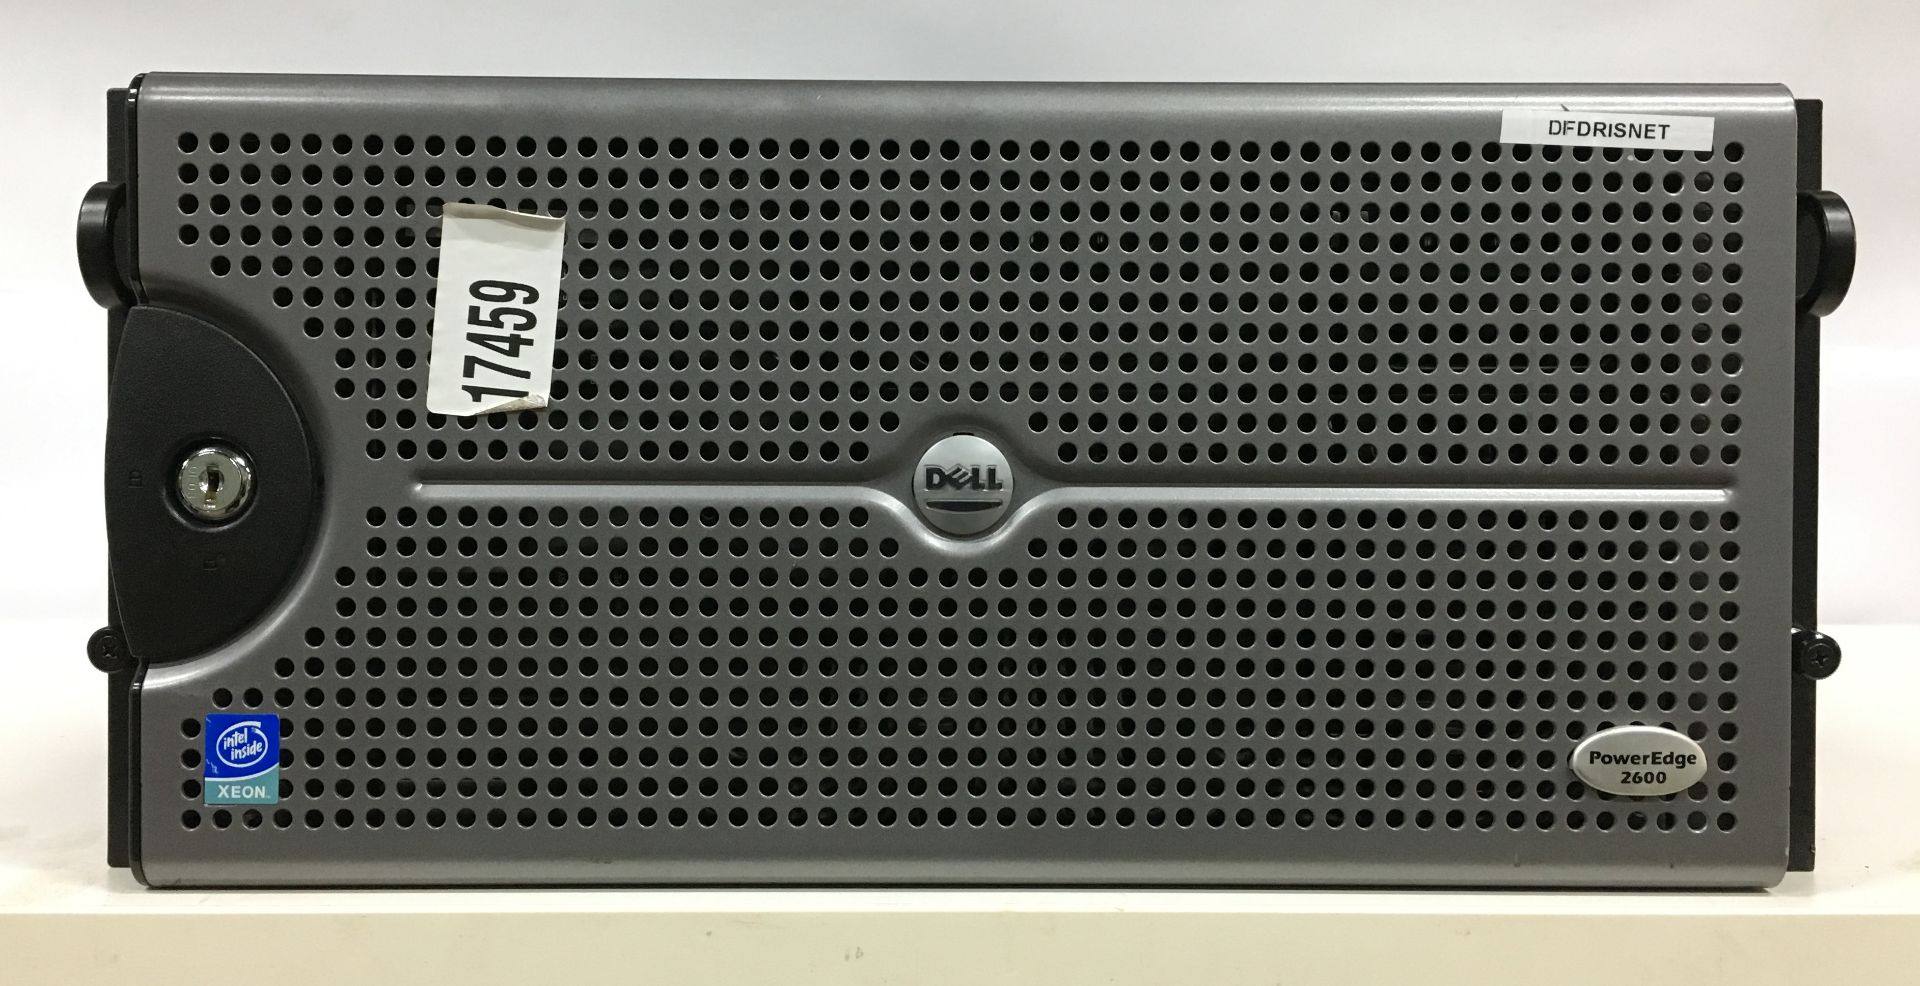 Dell PowerEdge 2600 Server - Image 2 of 5